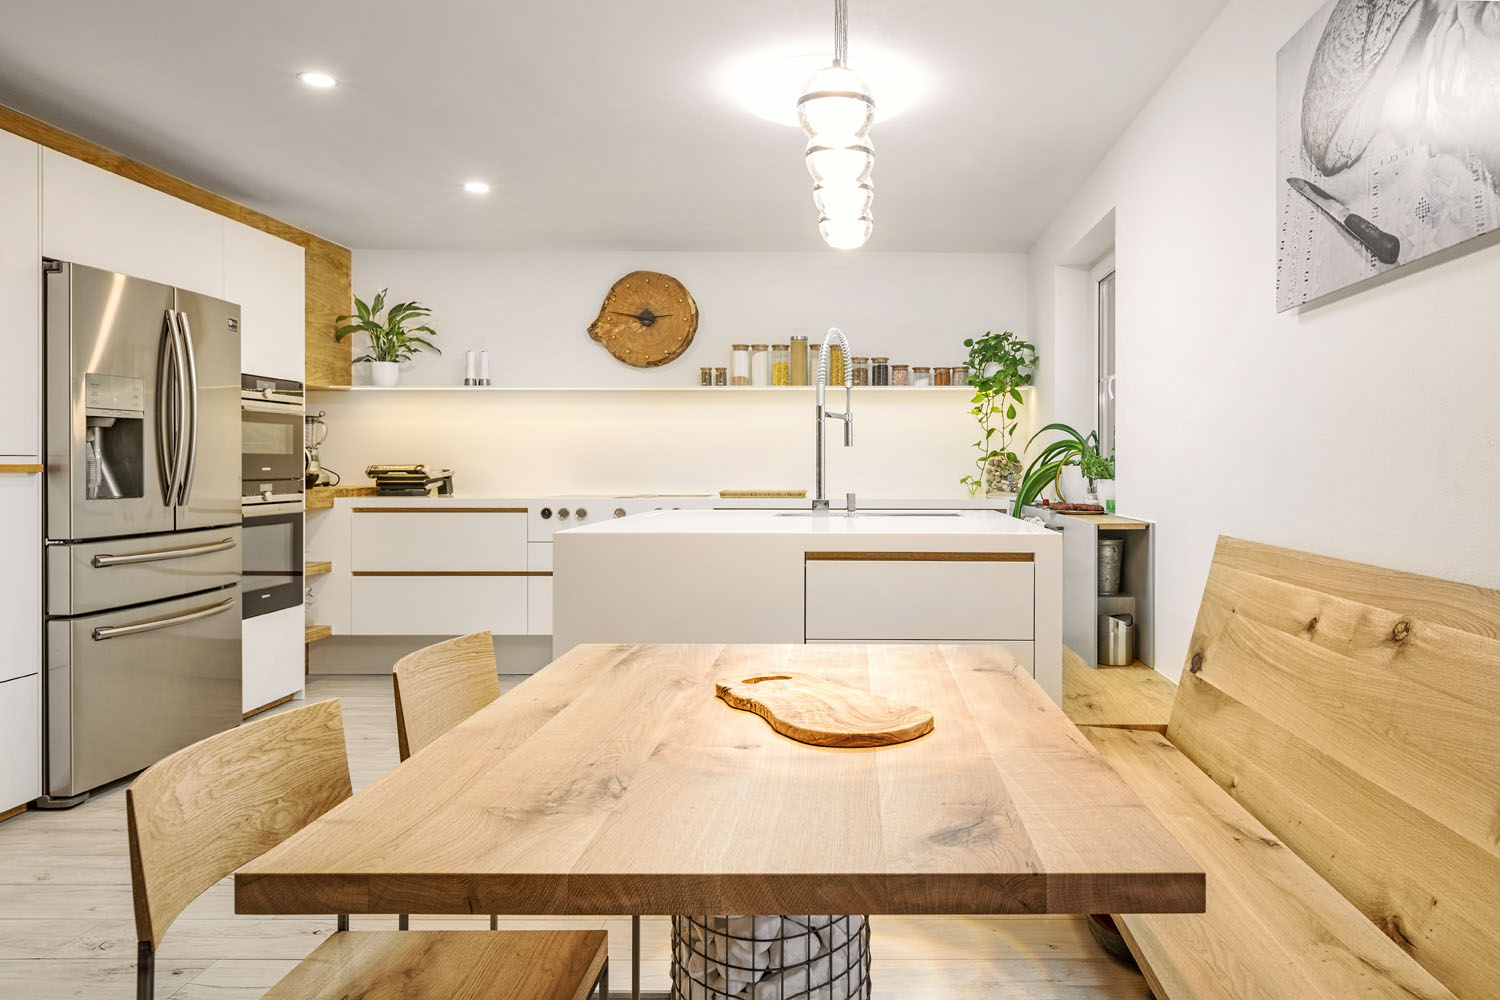 plan 3 kitchens / Maple wood kitchen / Timeless style combination